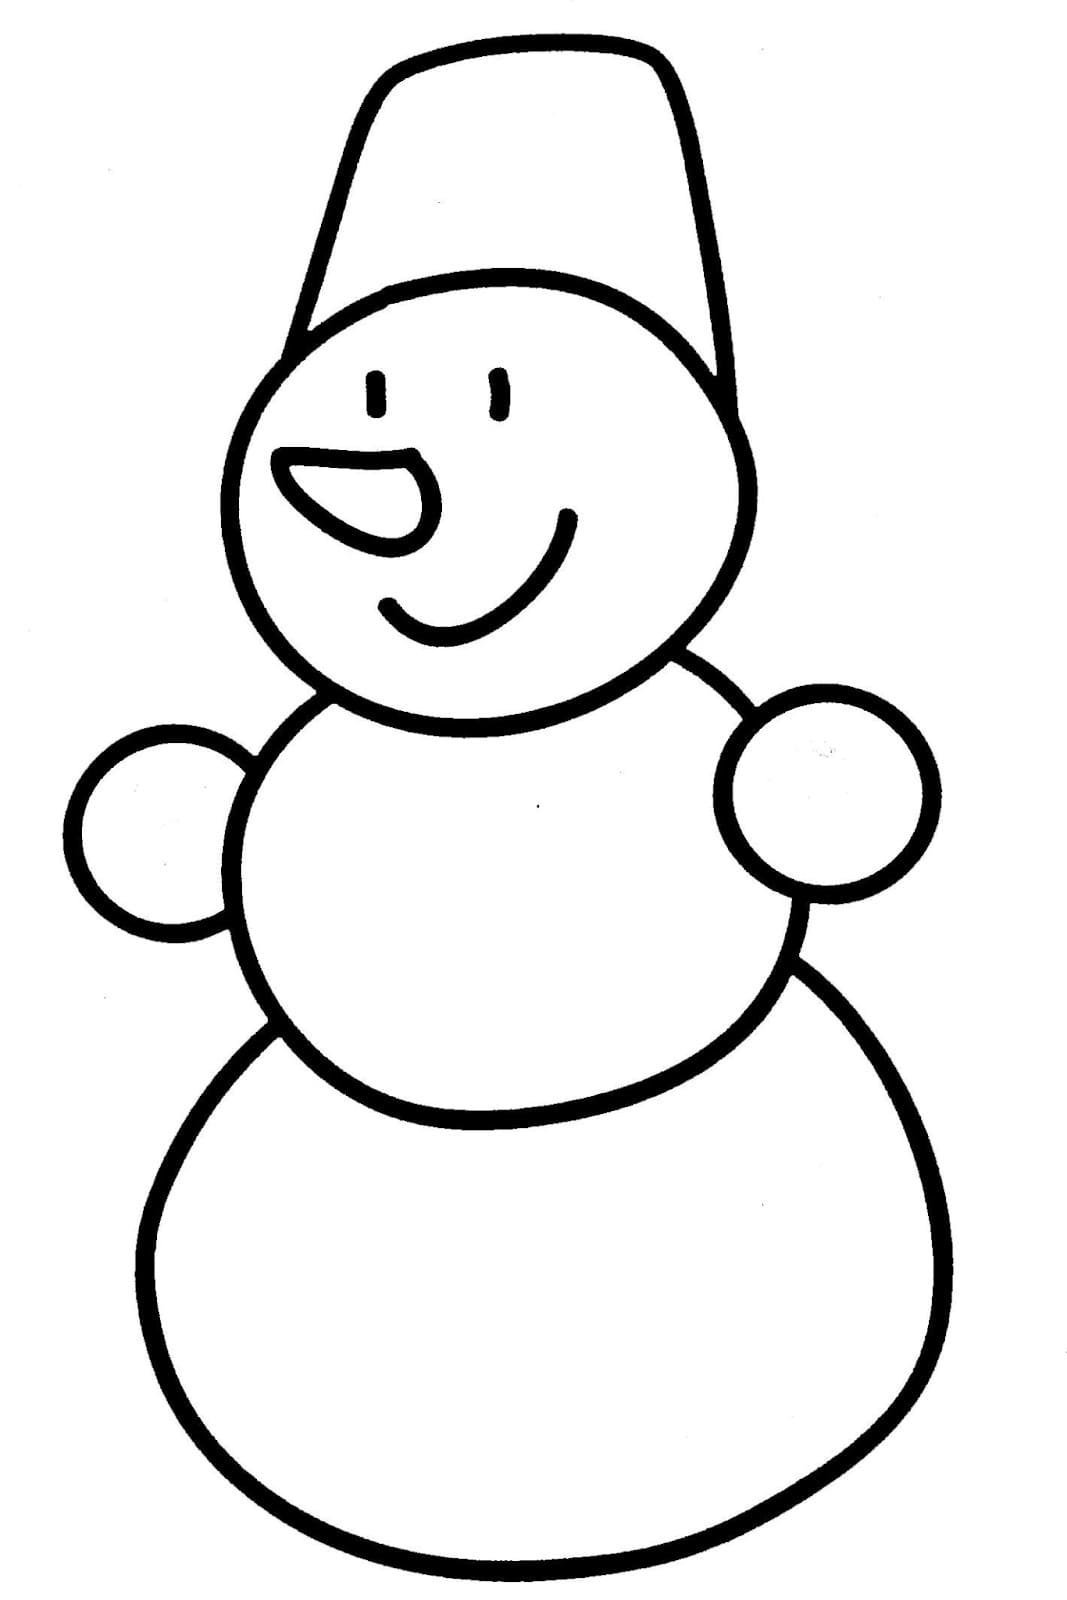 Снеговик эскиз рисунка фото